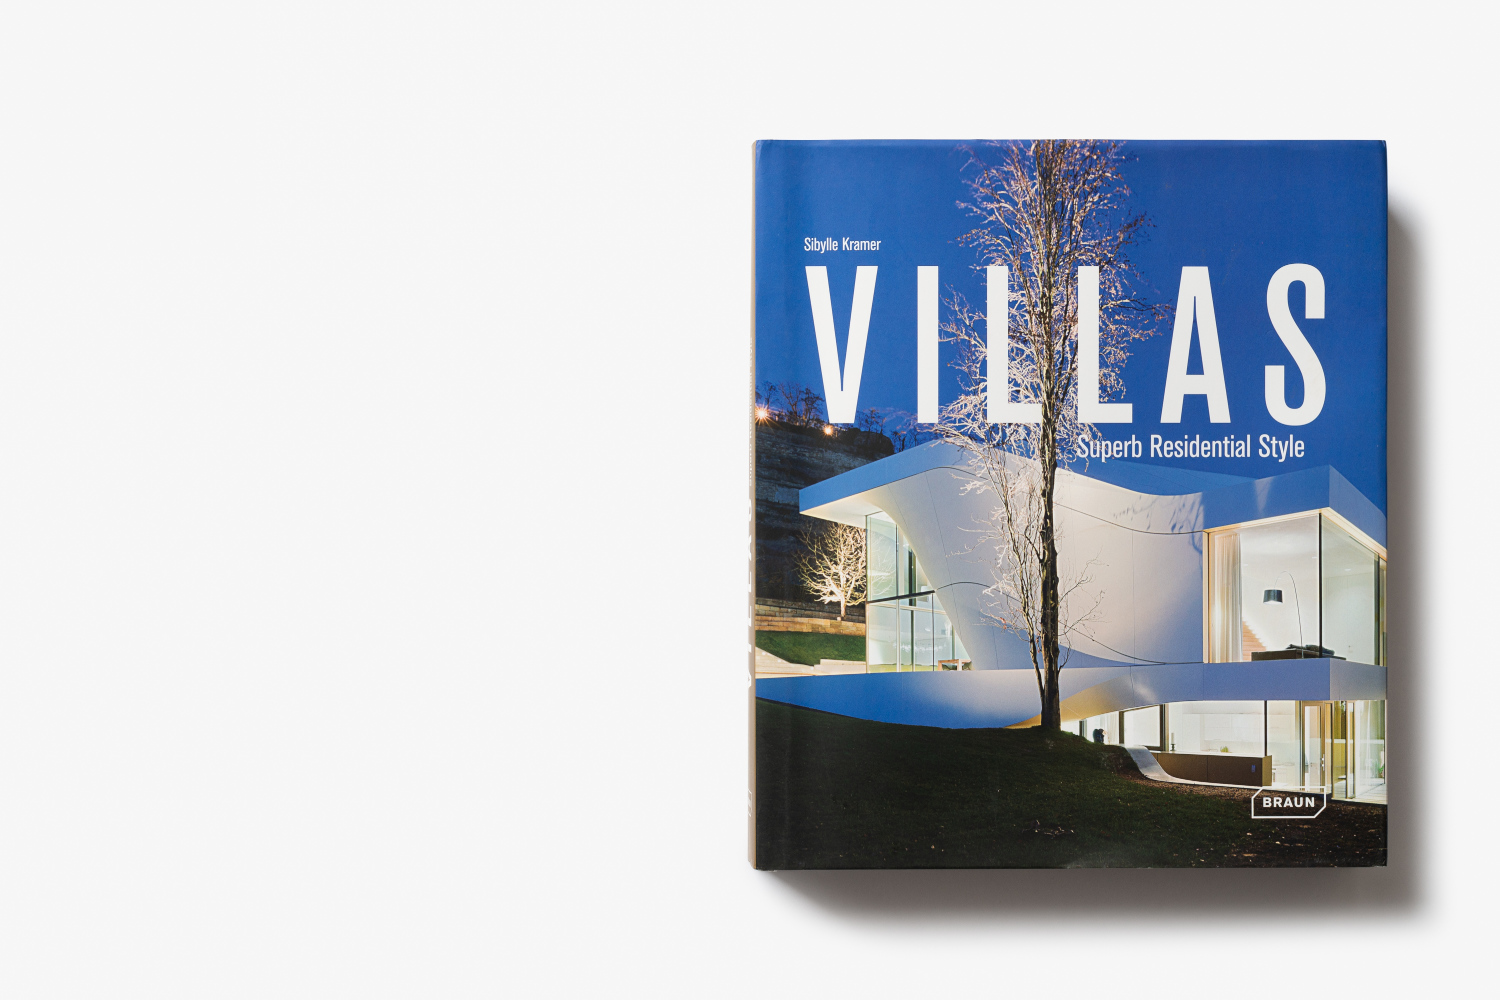 Birdseye Featured in “Villas – Superb Residential Style”